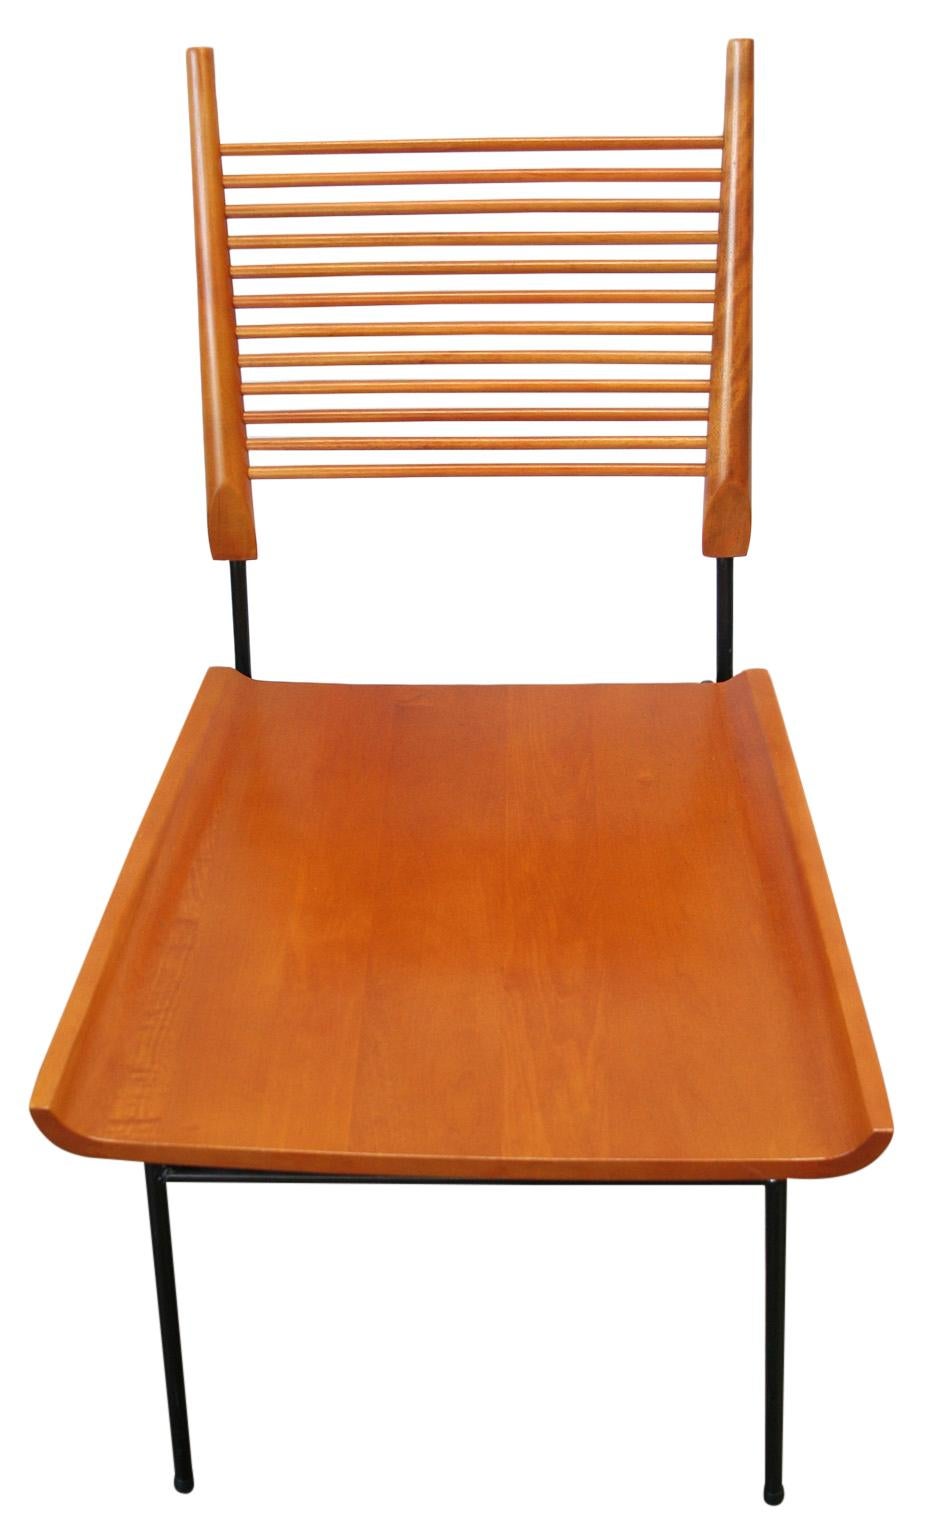 American Paul McCobb Planner Group Shovel Chairs #1533 Maple Iron Set of 4